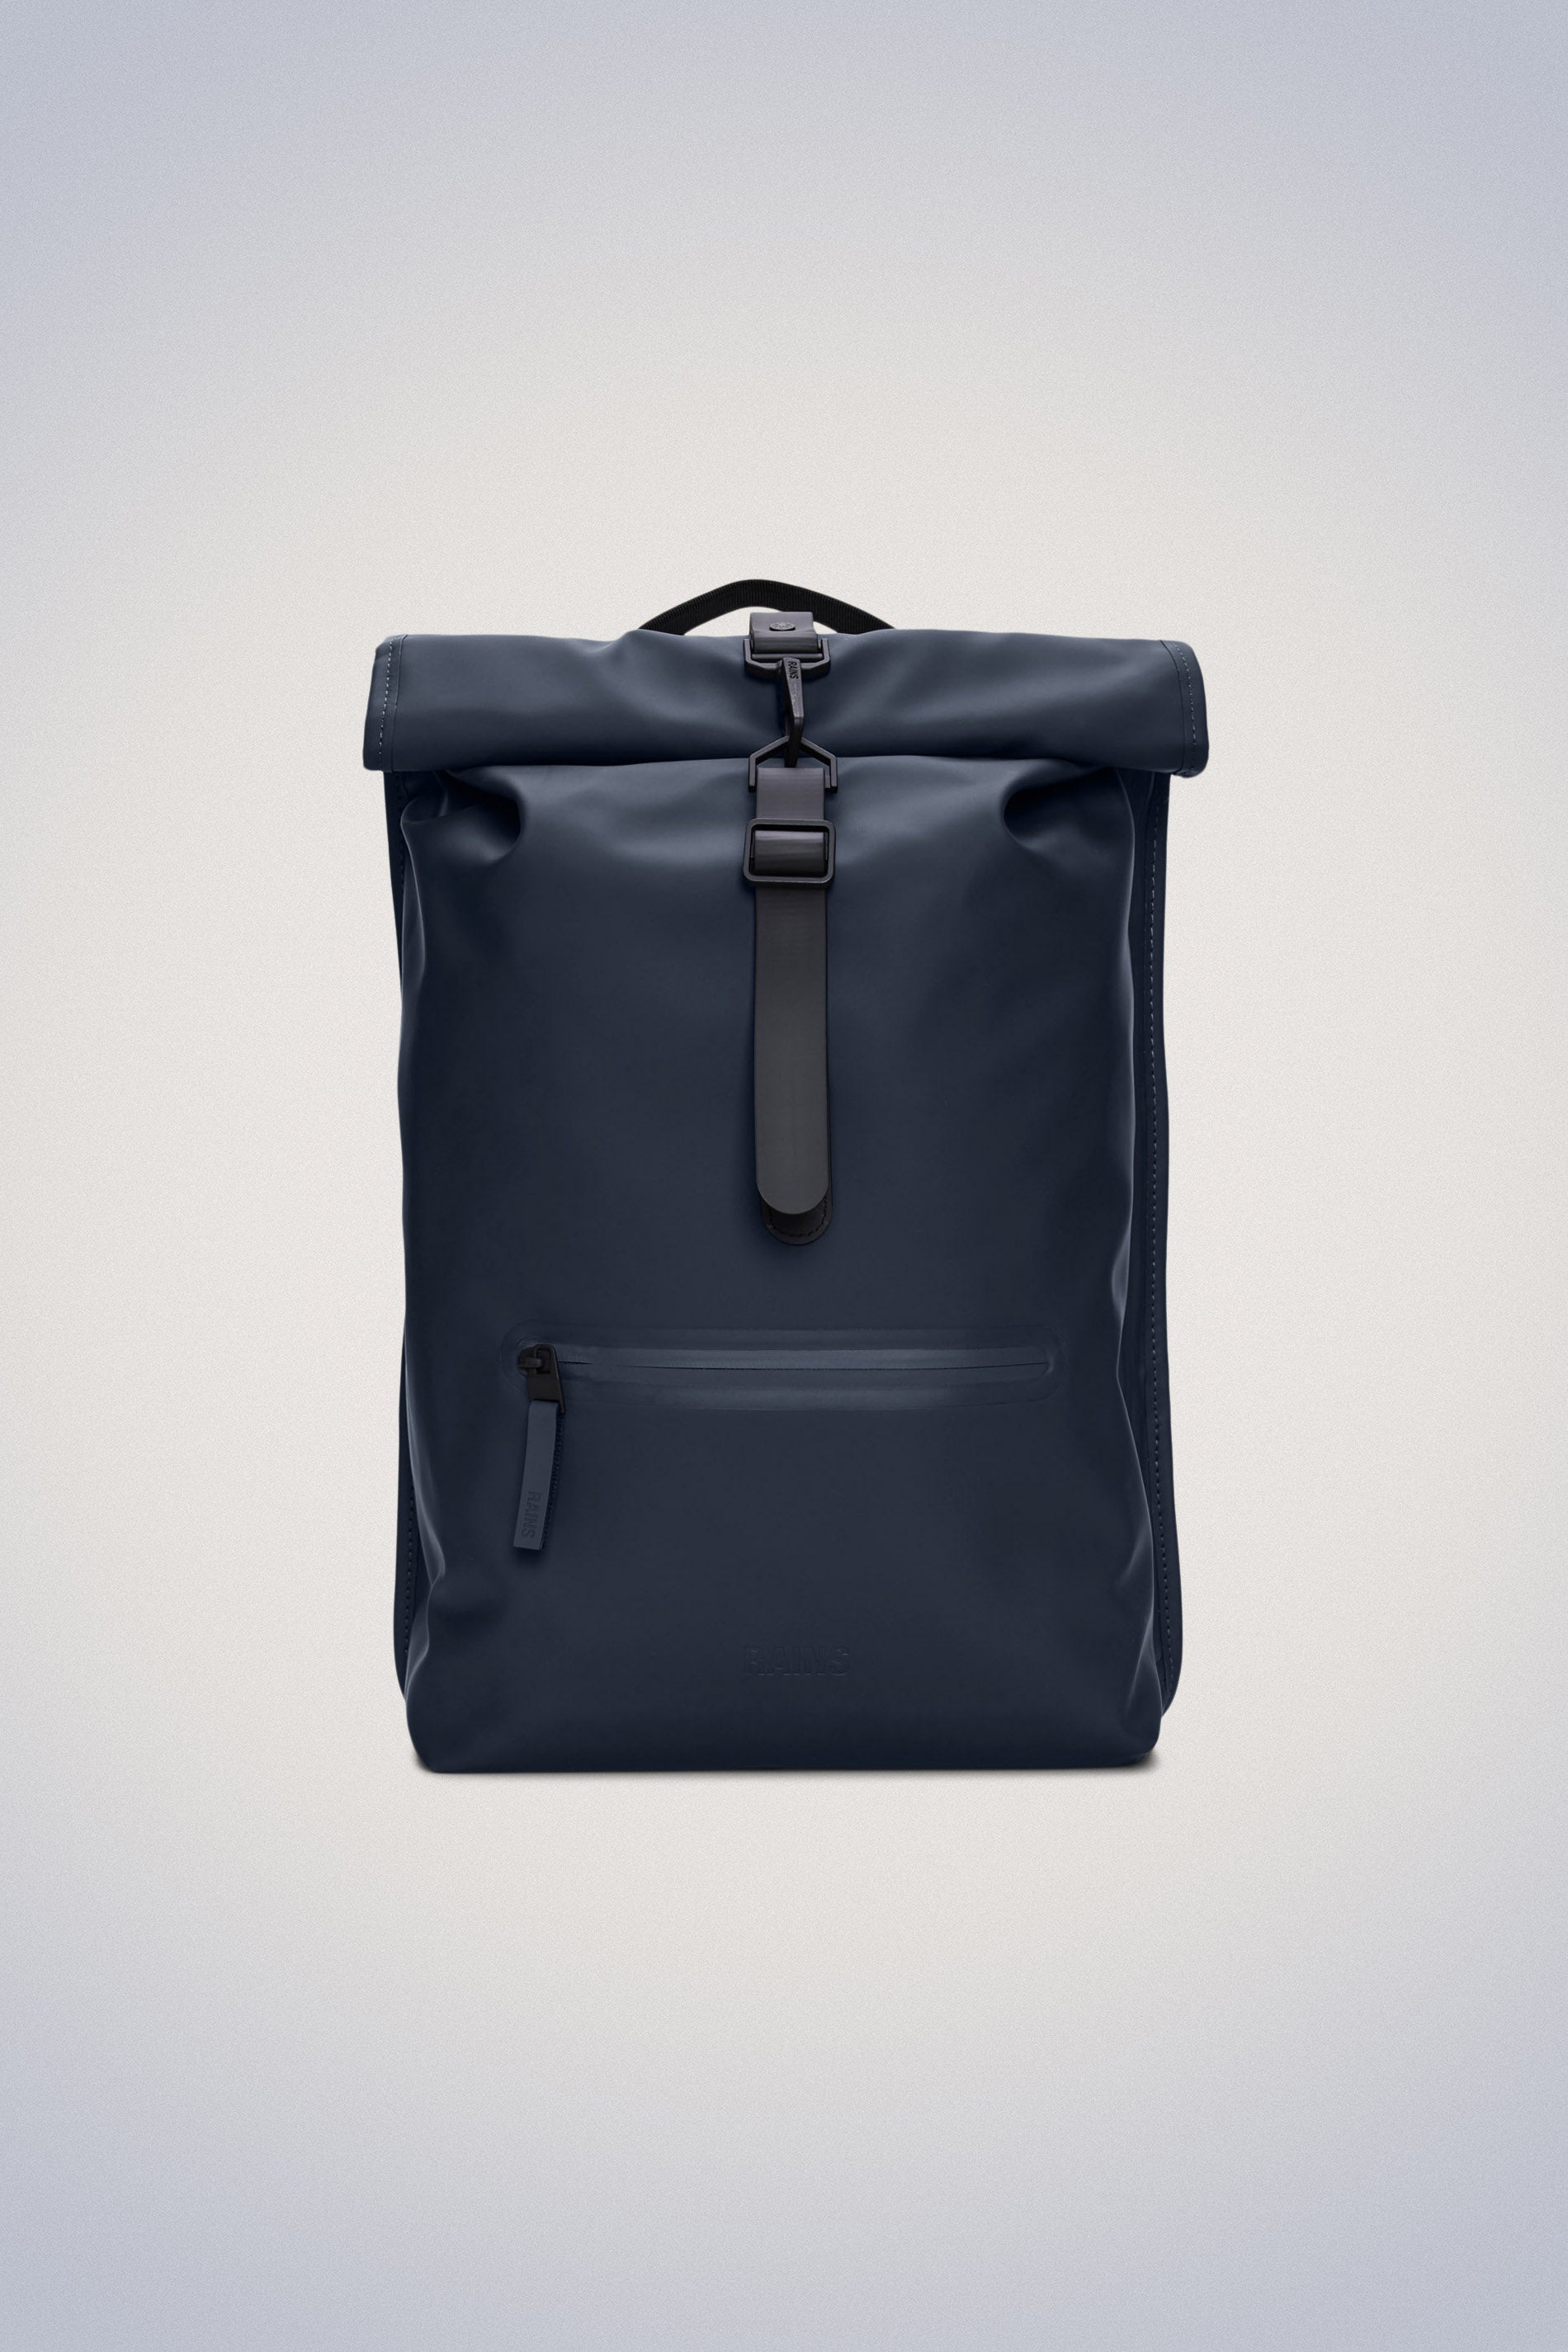 Waterproof Quality Drawstring Backpack in Ikeja - Bags, Danami  International